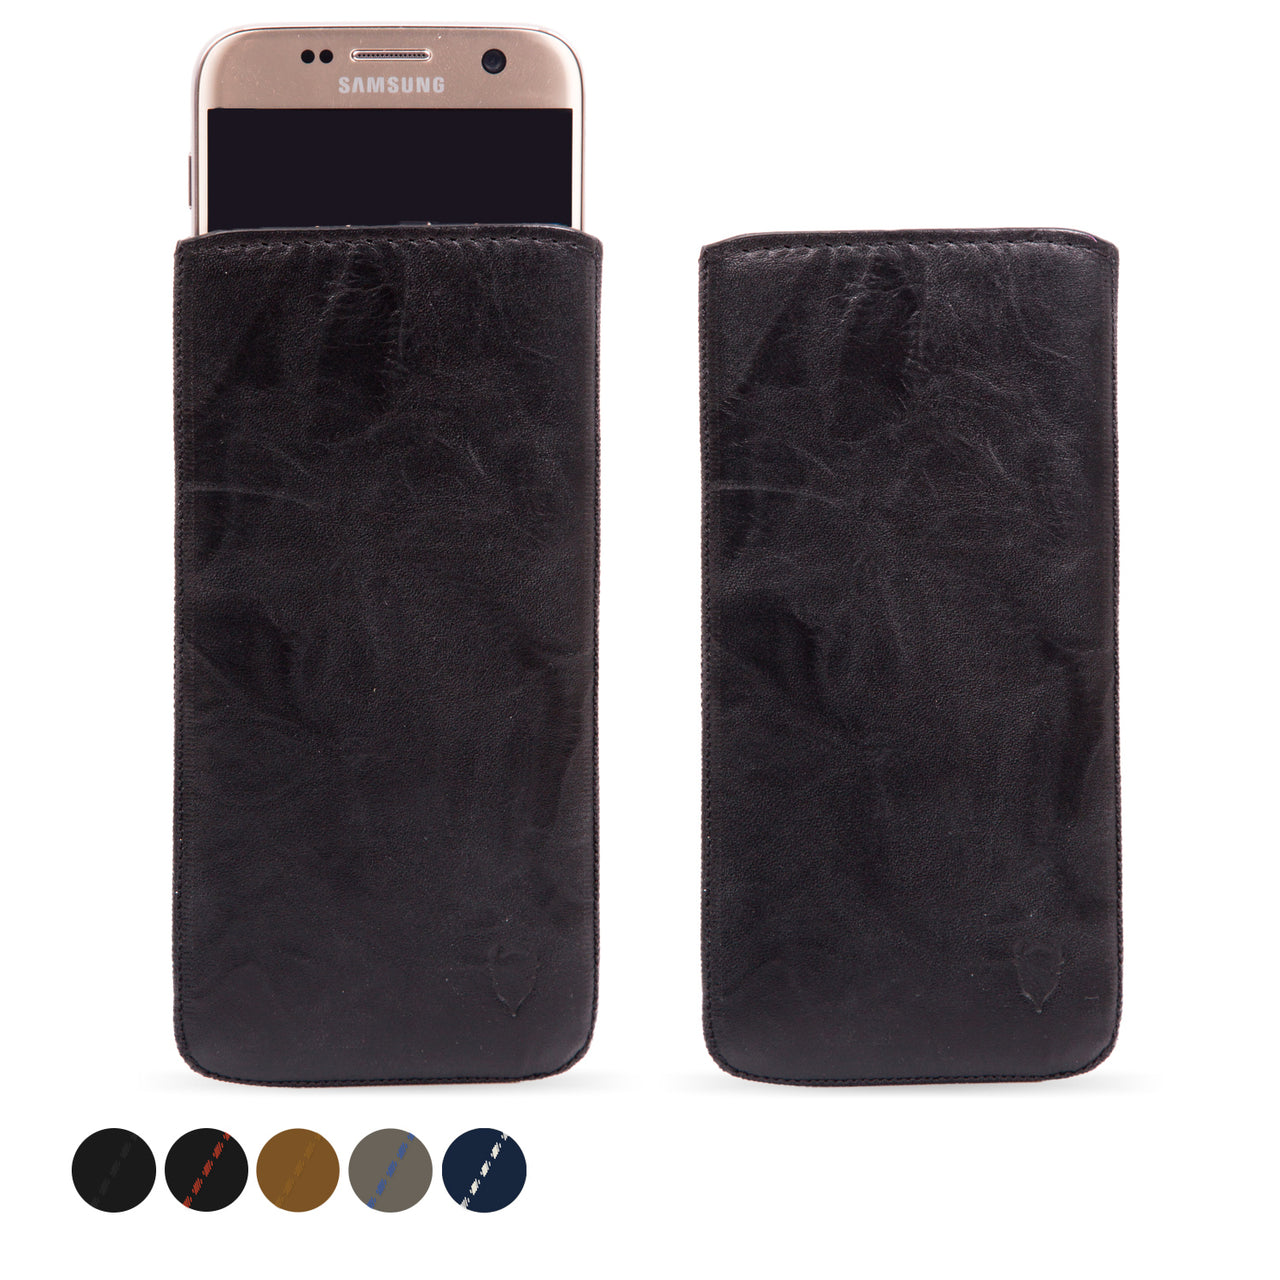 Samsung Galaxy S7 Genuine Leather Pouch Sleeve Case | Artisanpouch